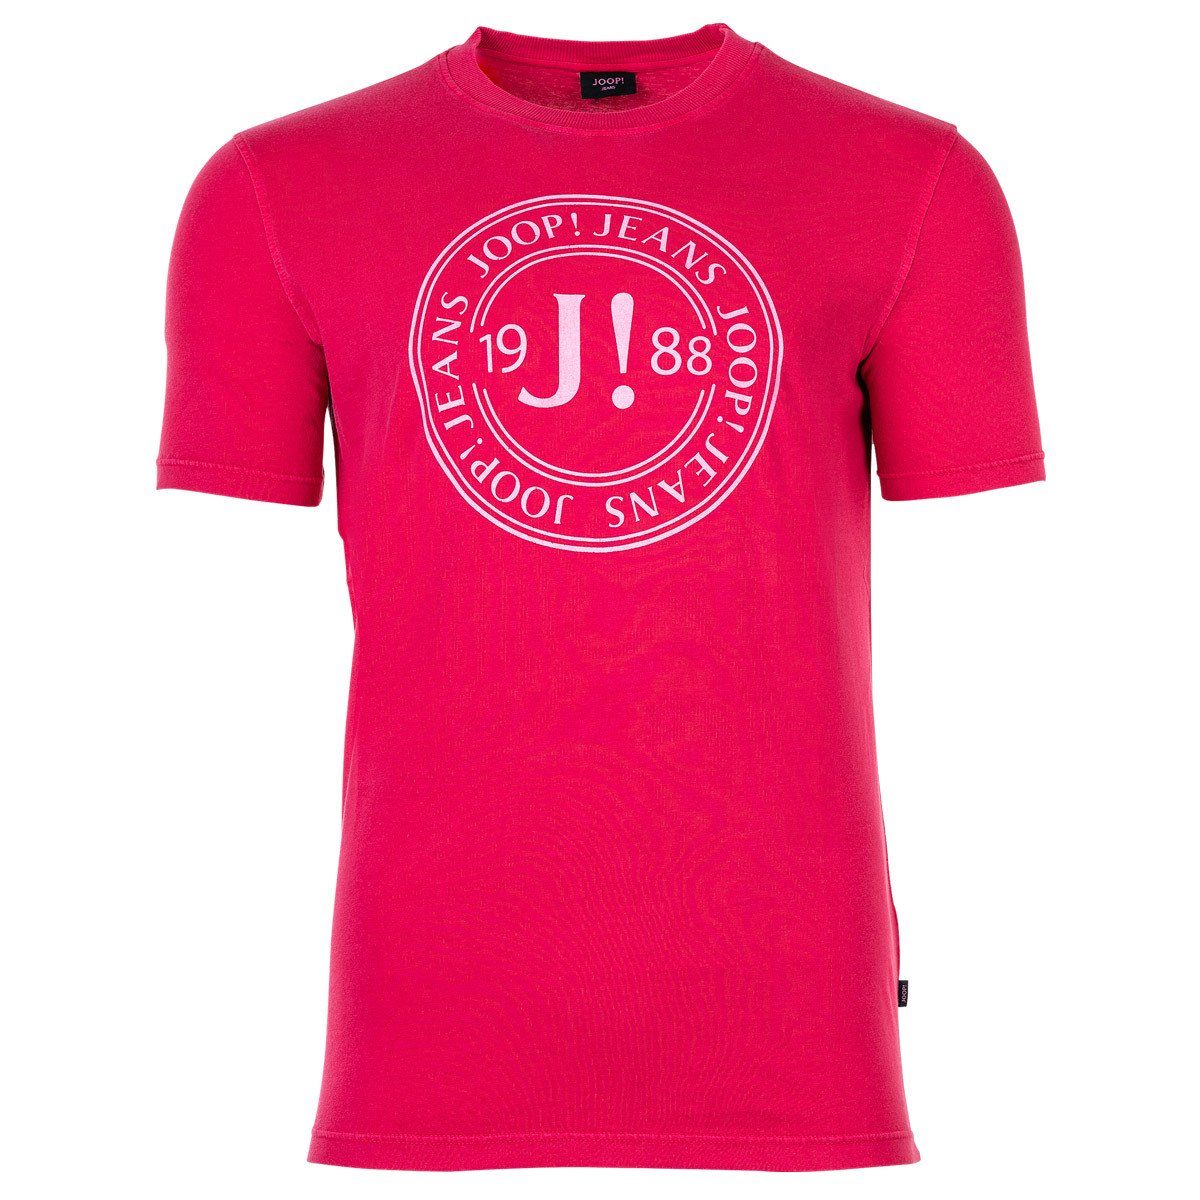 Joop Jeans T-Shirt Herren T-Shirt - Pink Rundhals, Halbarm JJ222J016